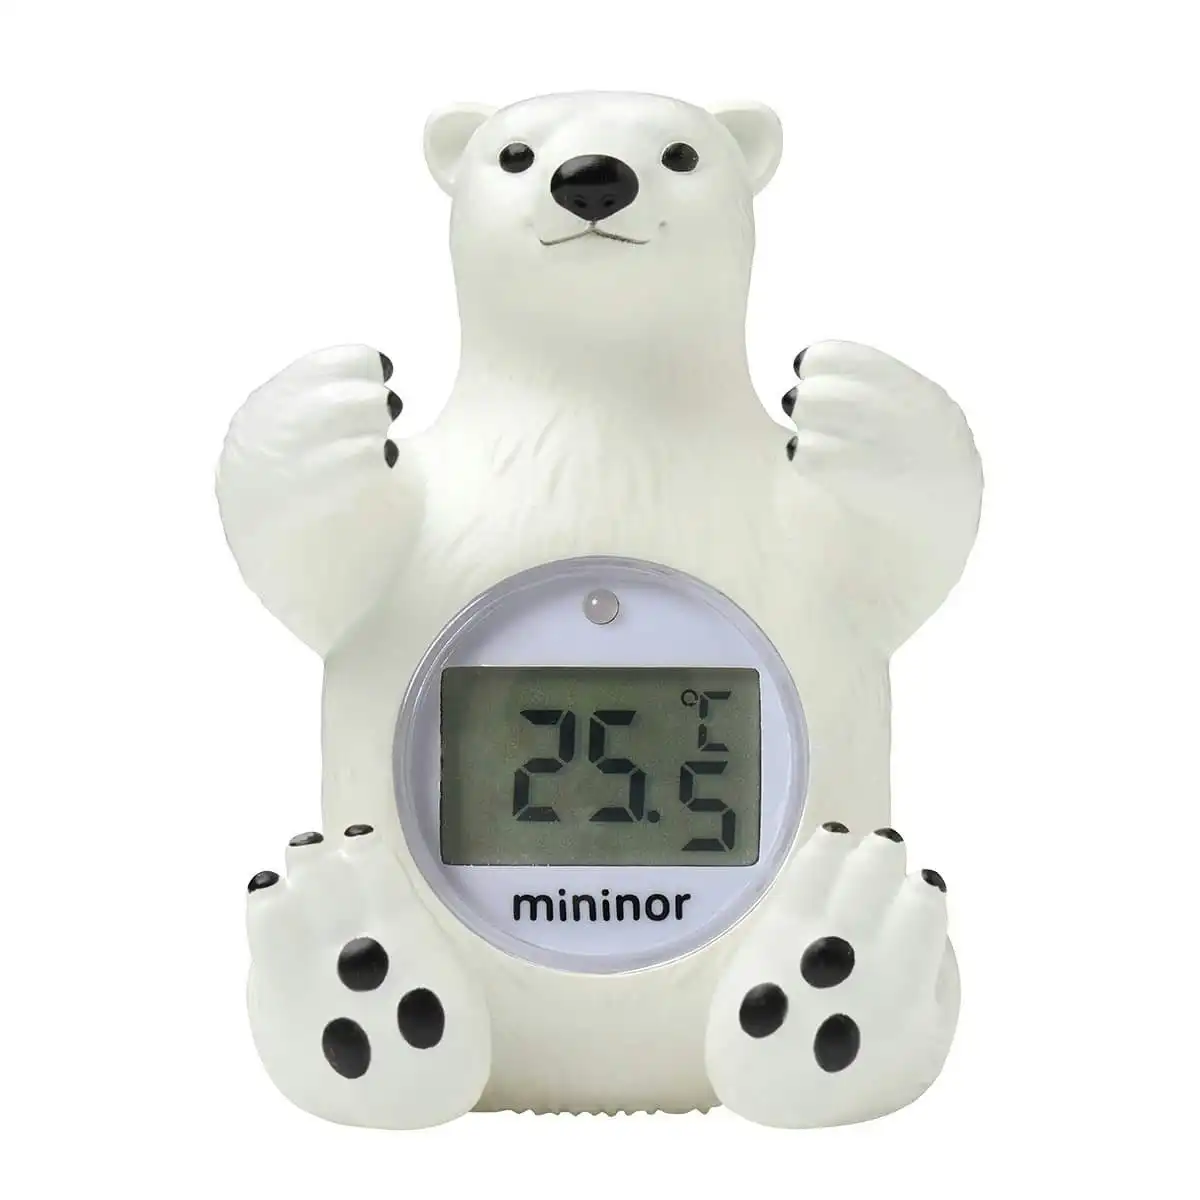 Mininor Baby/Infant Bath Animal Toy Water Safety Thermometer White Polar Bear